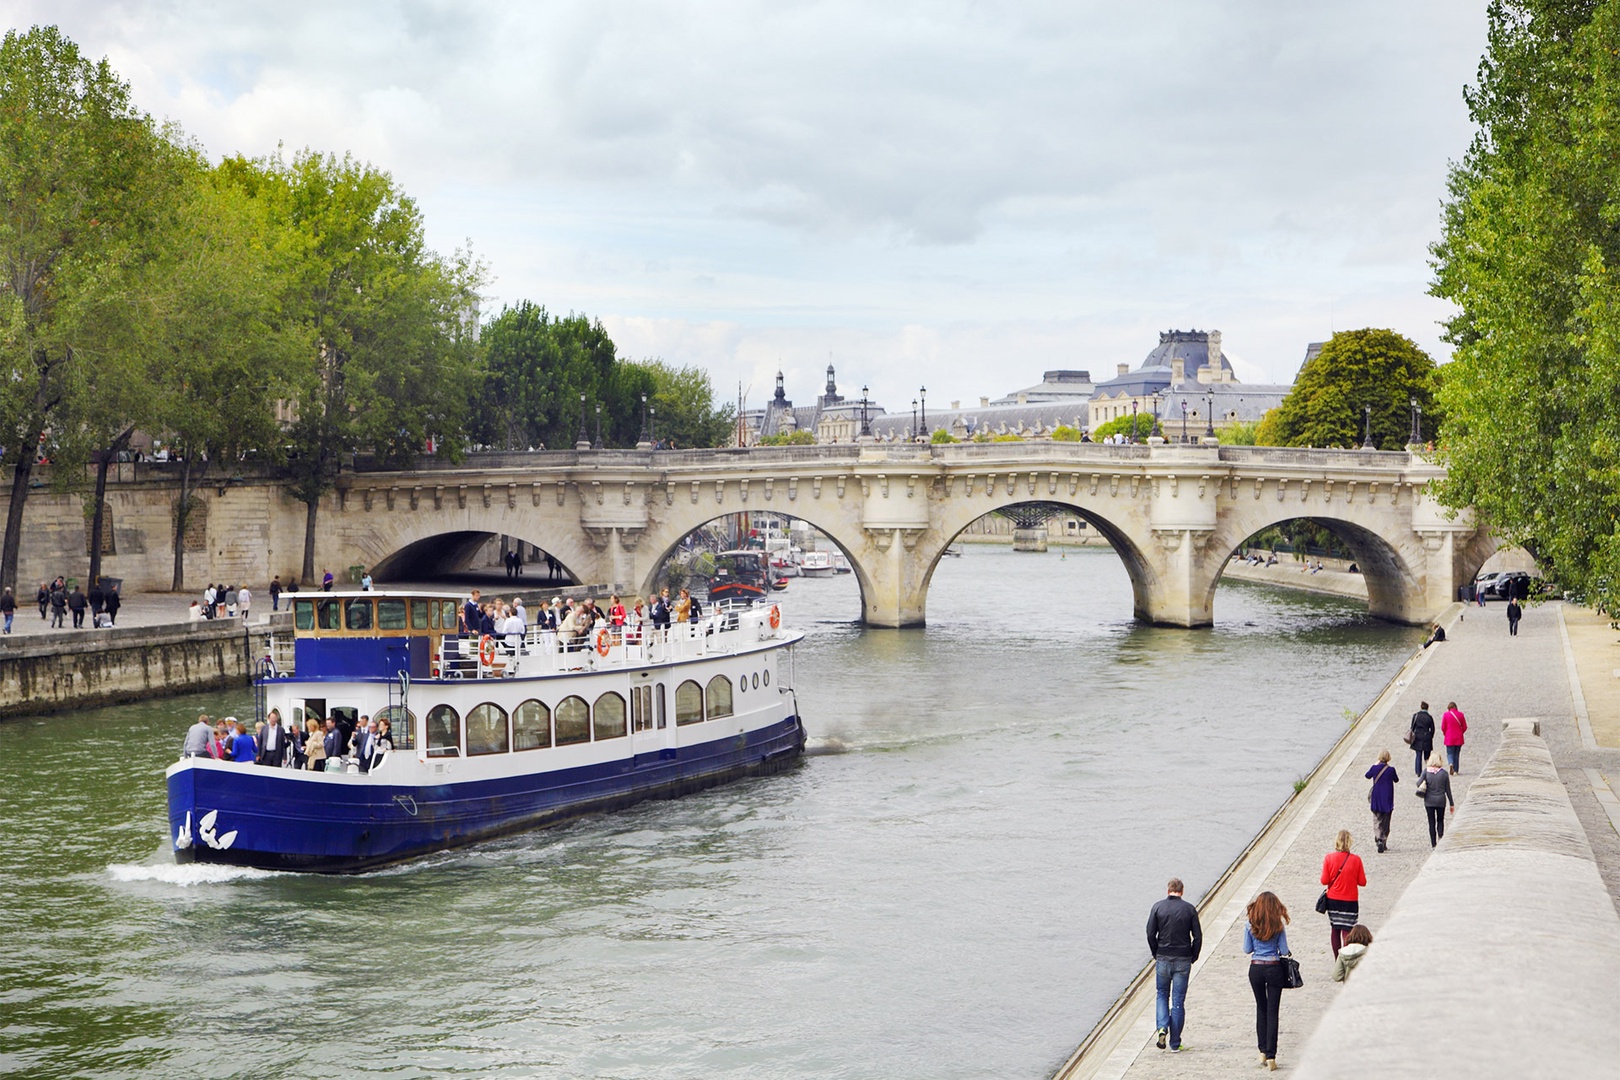 Book a Seine cruise or take a leisurely stroll along the Seine.